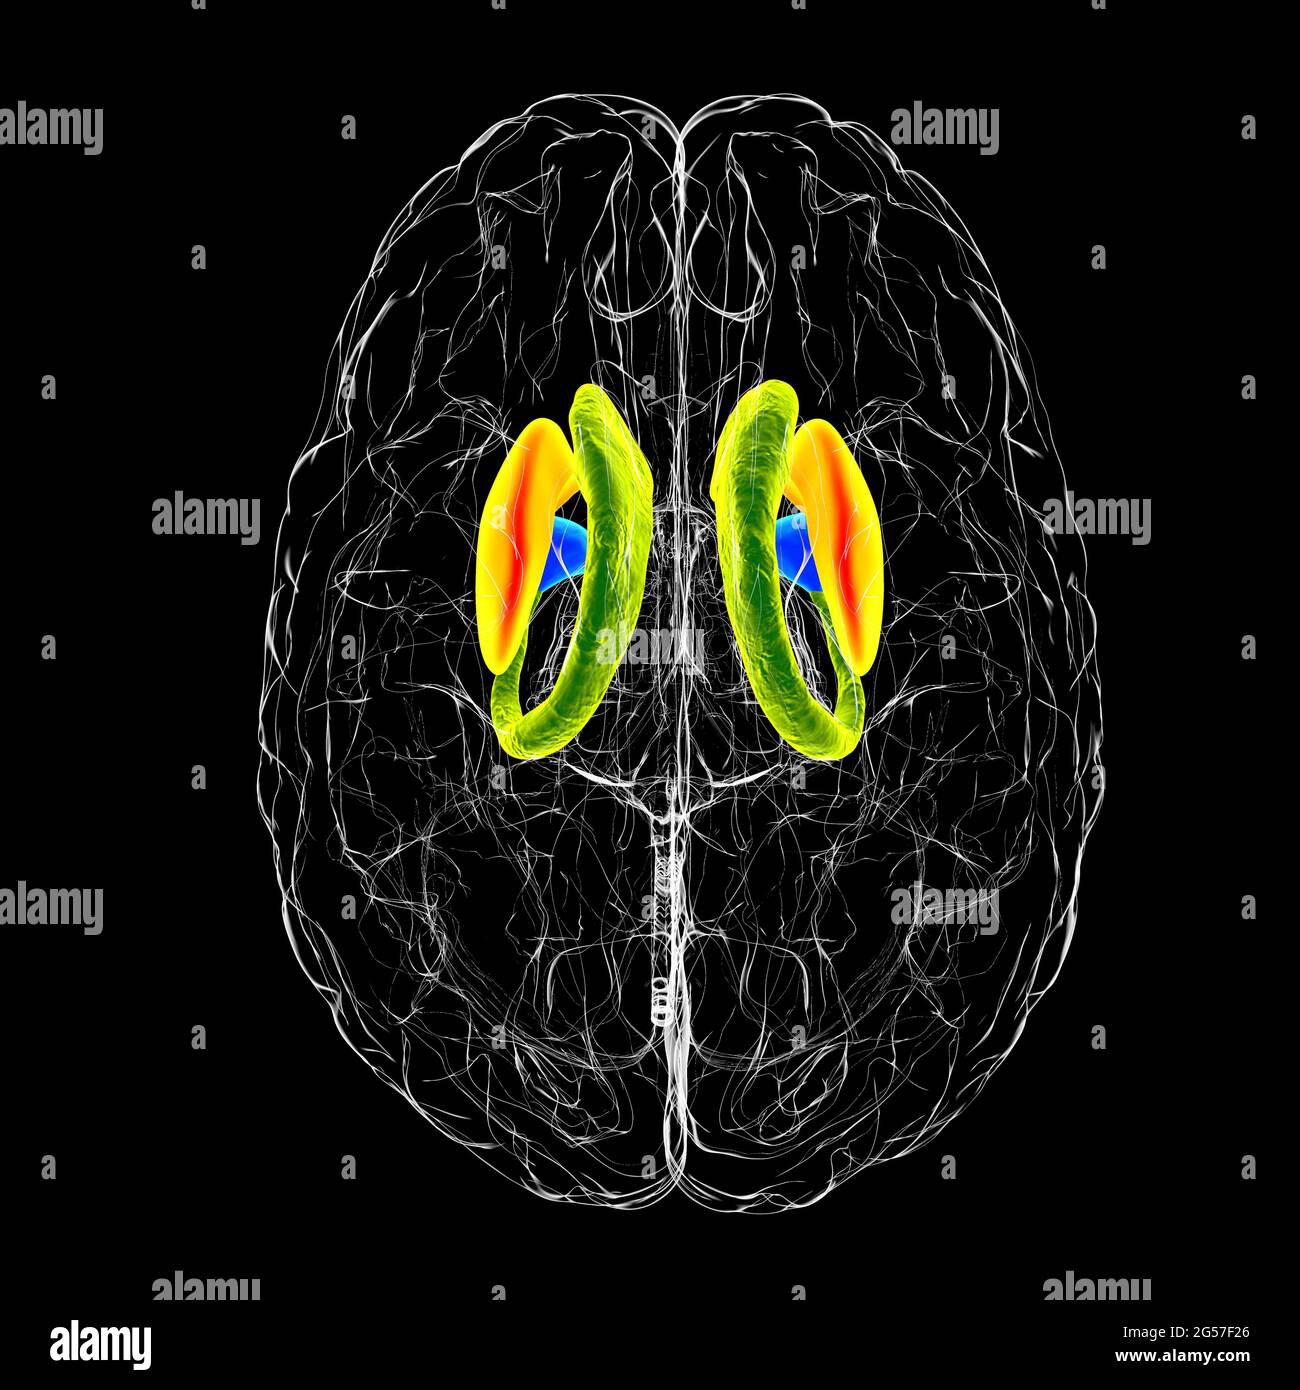 Dorsal striatum in the brain, illustration Stock Photo